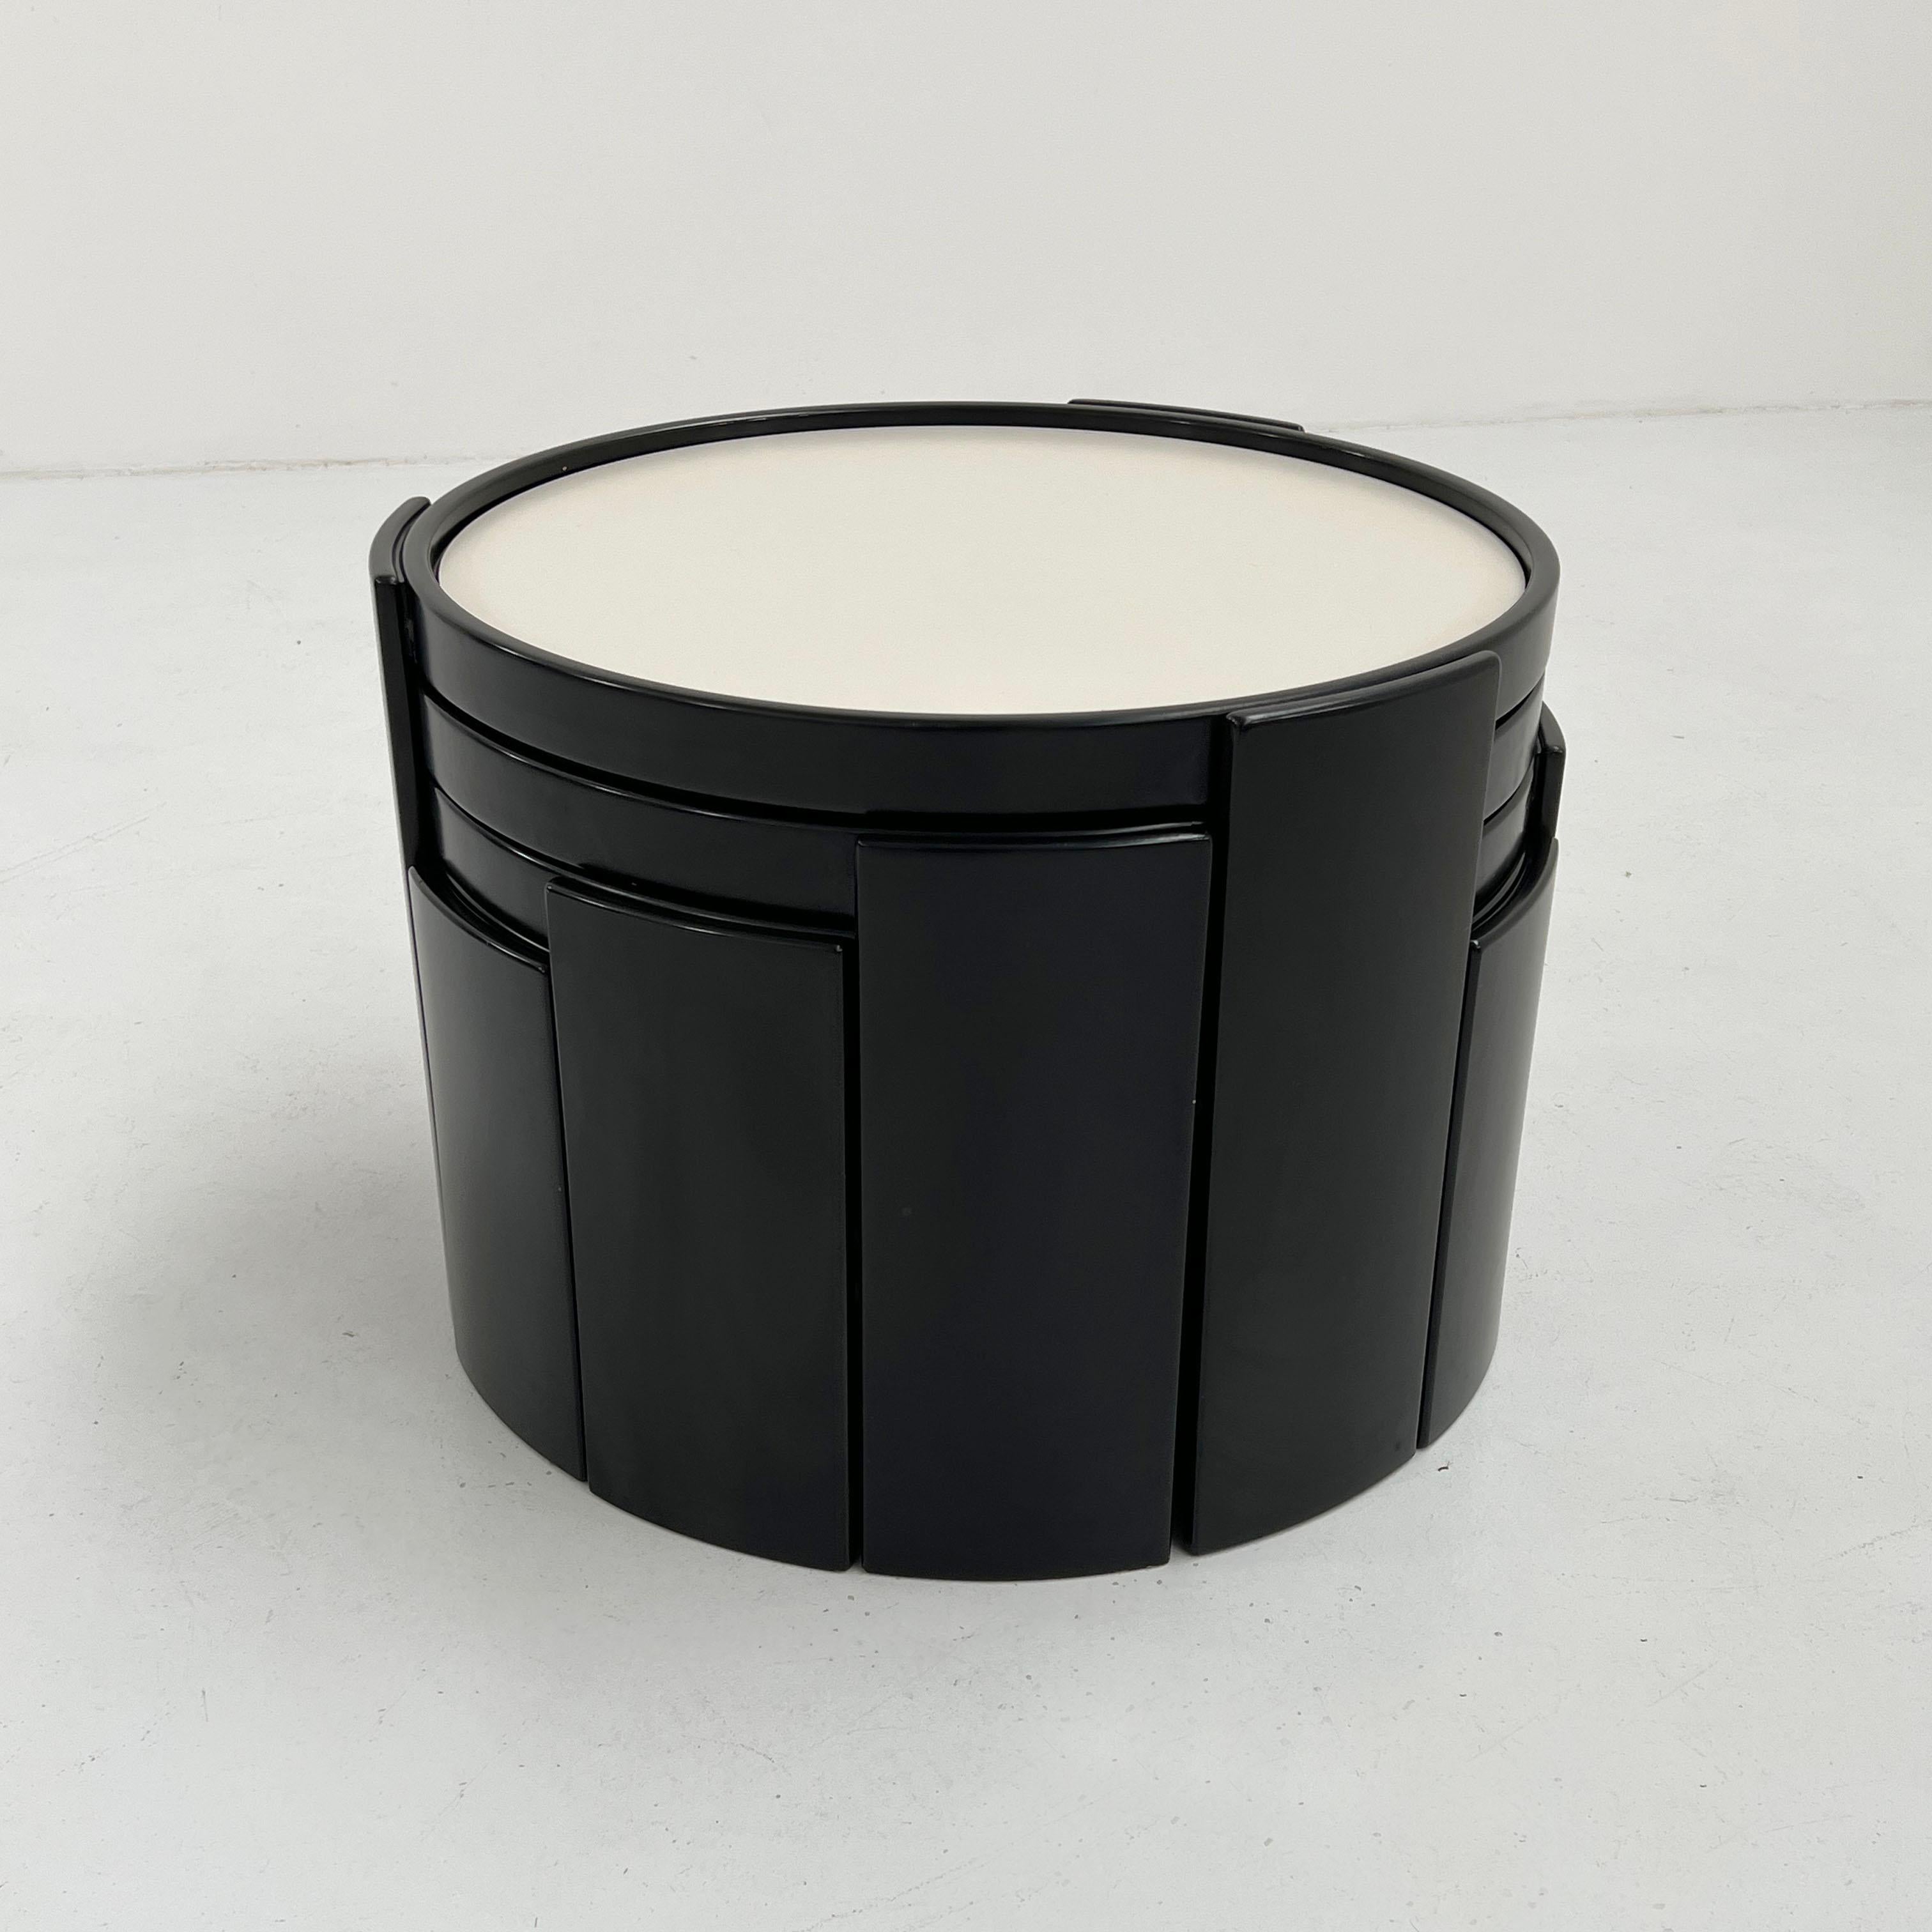 Designer - Gianfranco Frattini
Producer - Cassina 
Model - Model 780 Nesting Tables 
Design Period - Sixties
Measurements - Width 61 cm x Depth 61 cm x Height 44 / 39 / 34 / 29 cm
Materials - Wood, Laminate
Color - Black & White 
Comments - Light